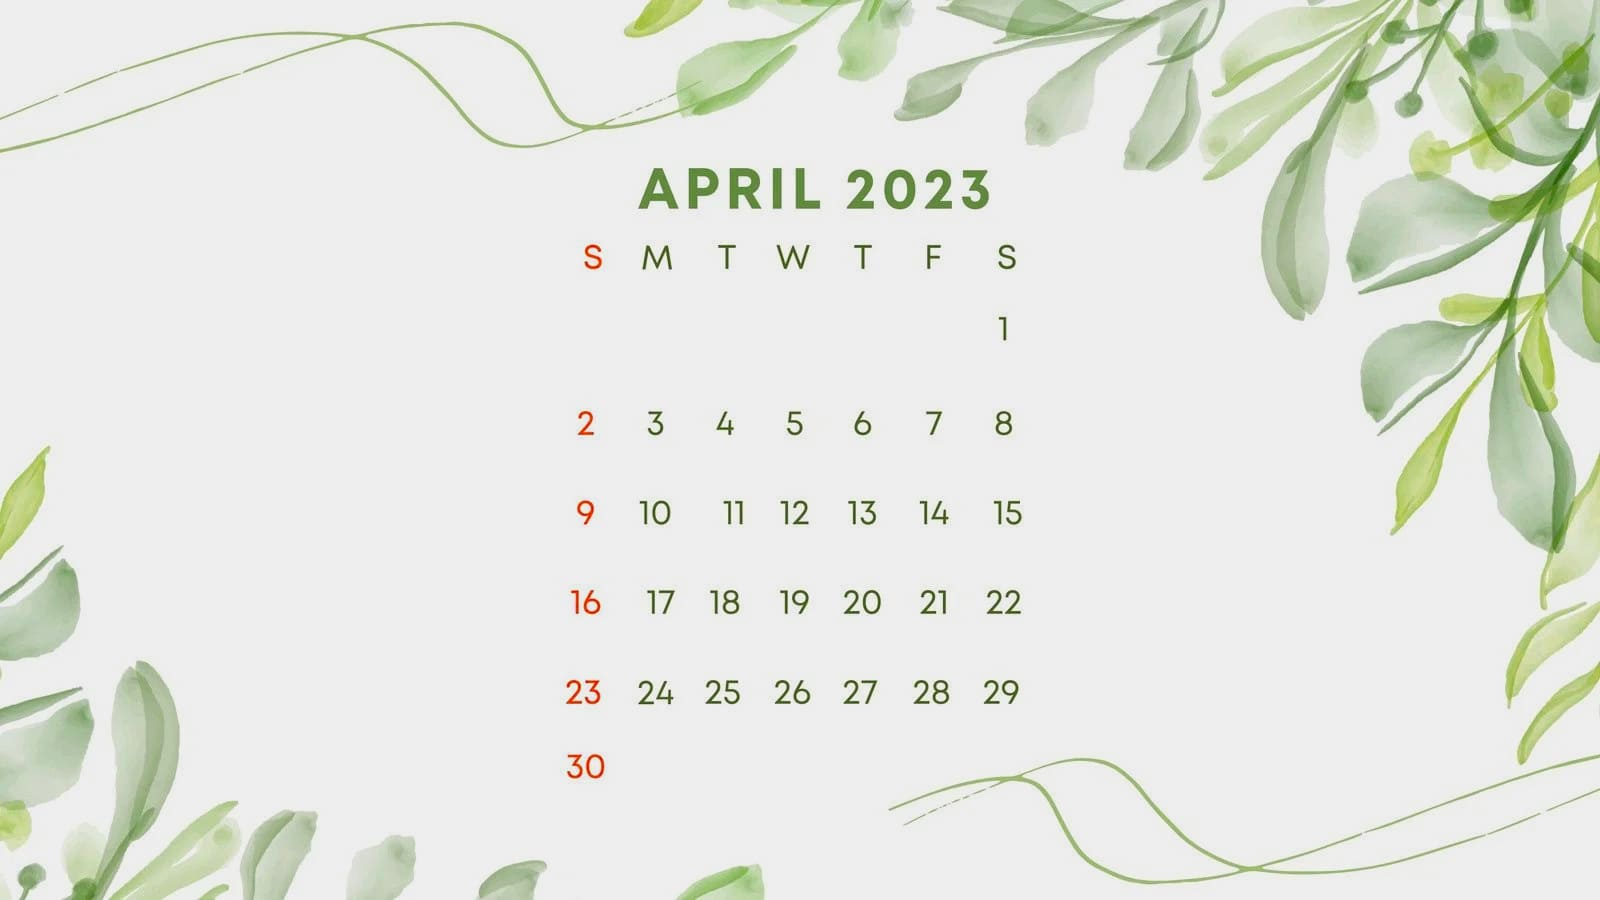 April Calendar 2023 Wallpapers